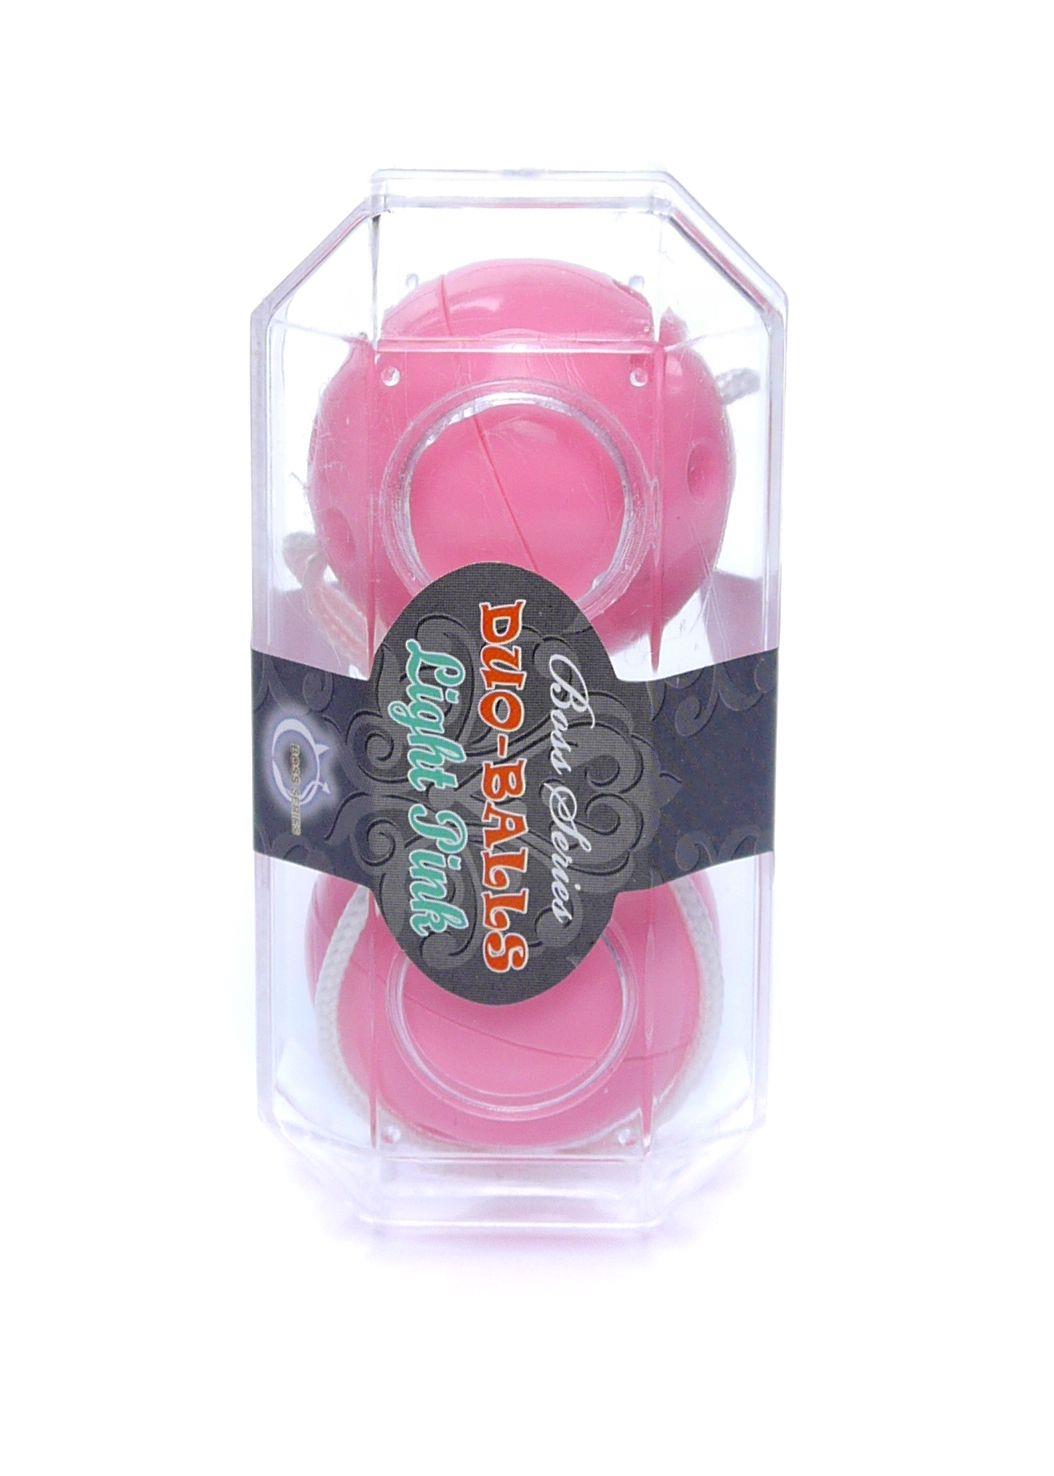 Bossoftoys - 67-00032 - Smart Duo Balls - Duo Kegal ball - Colour box - light pink